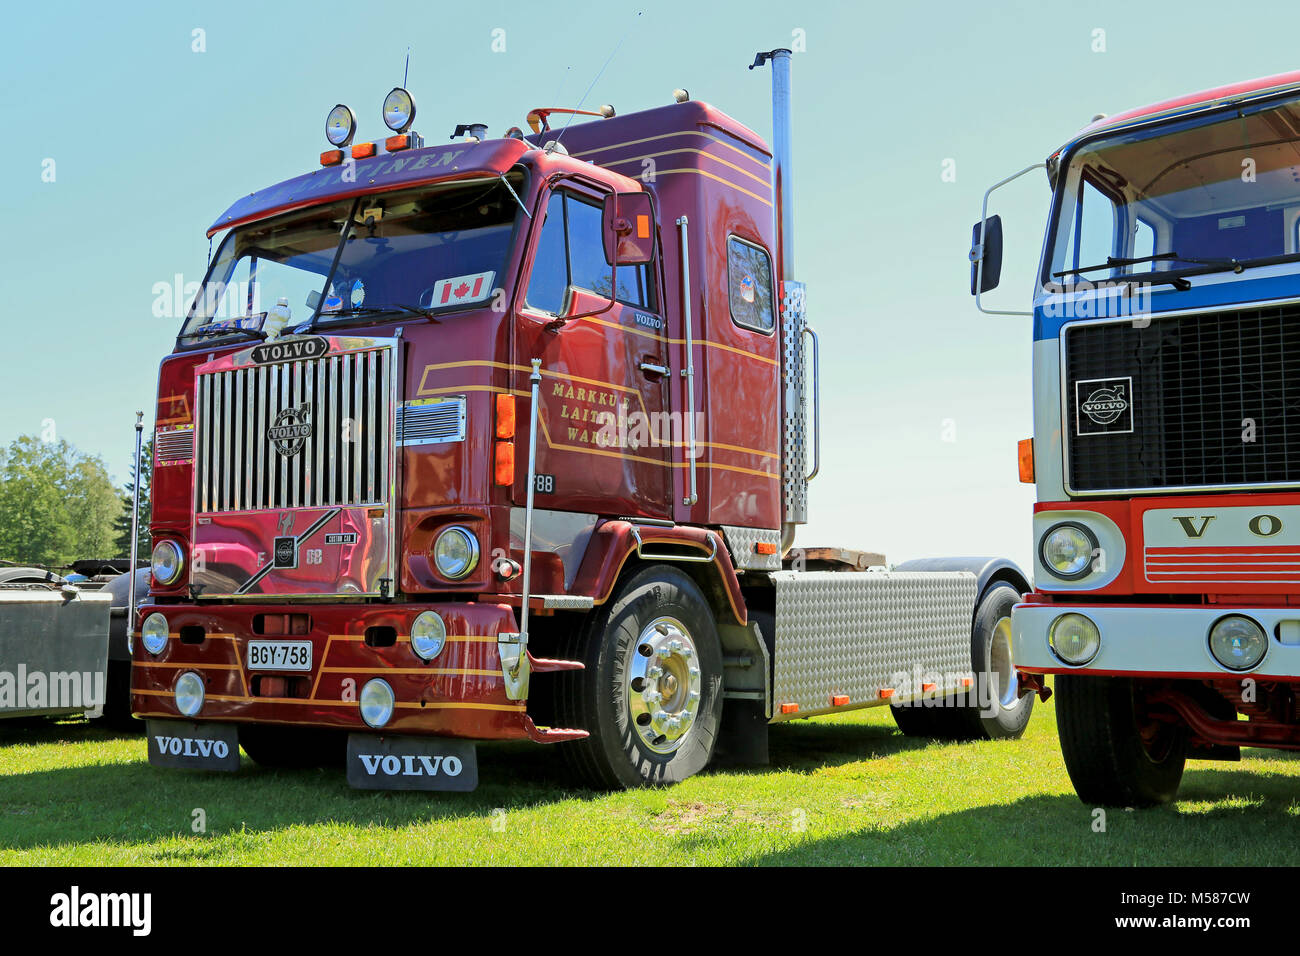 PORVOO, FINLAND - JUNE 28, 2014: Dark red Volvo F88 year 1976 vintage truck on display at Riverside Truck Meeting 2014 in Porvoo, Finland. Stock Photo